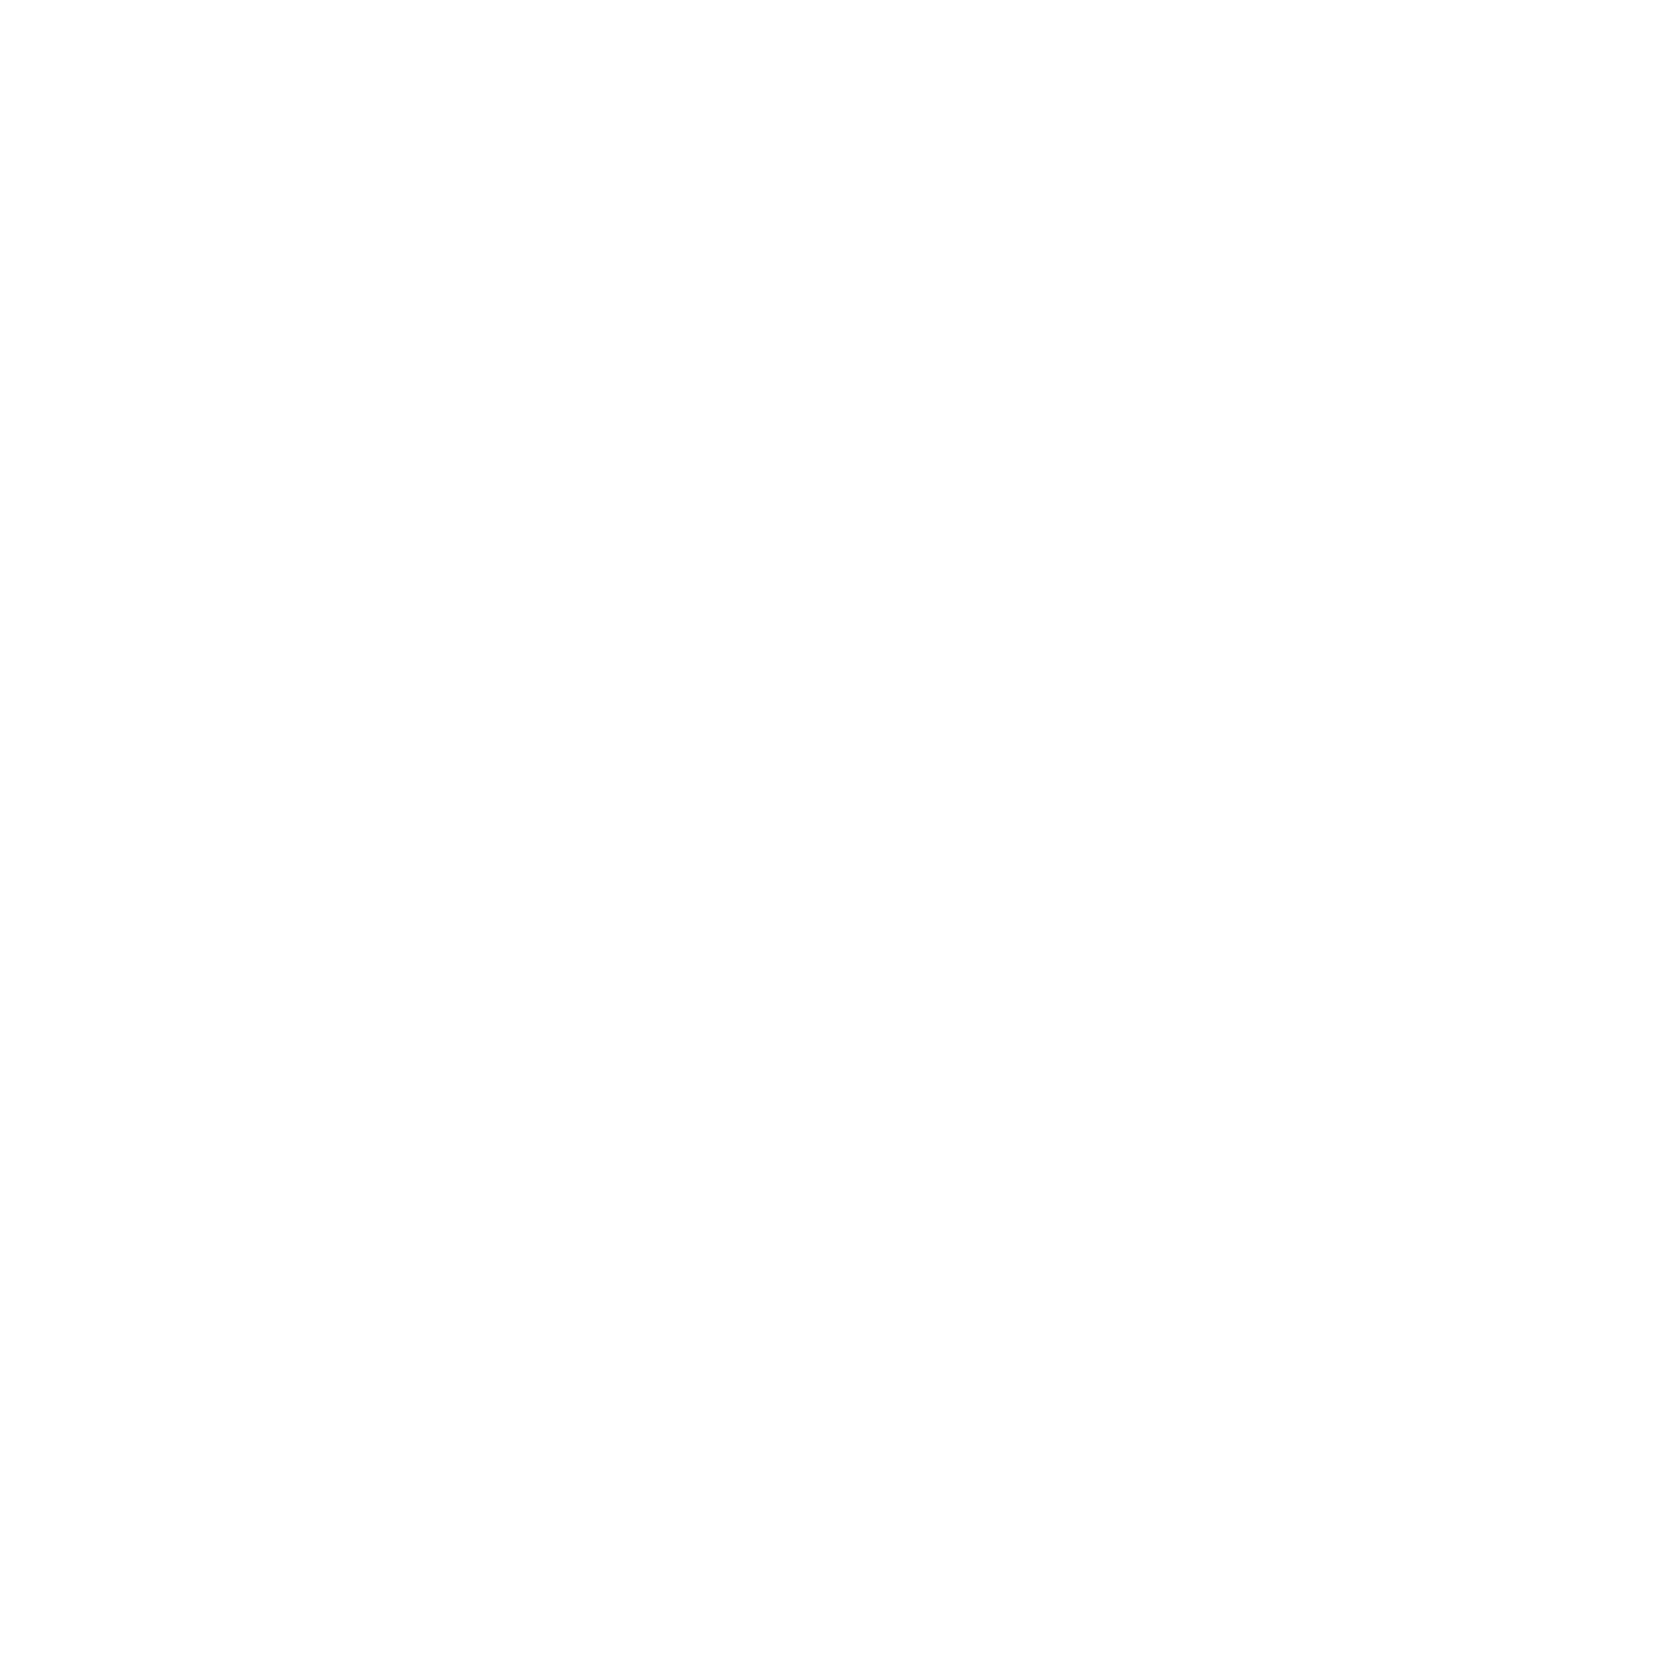 Logo design for international summit